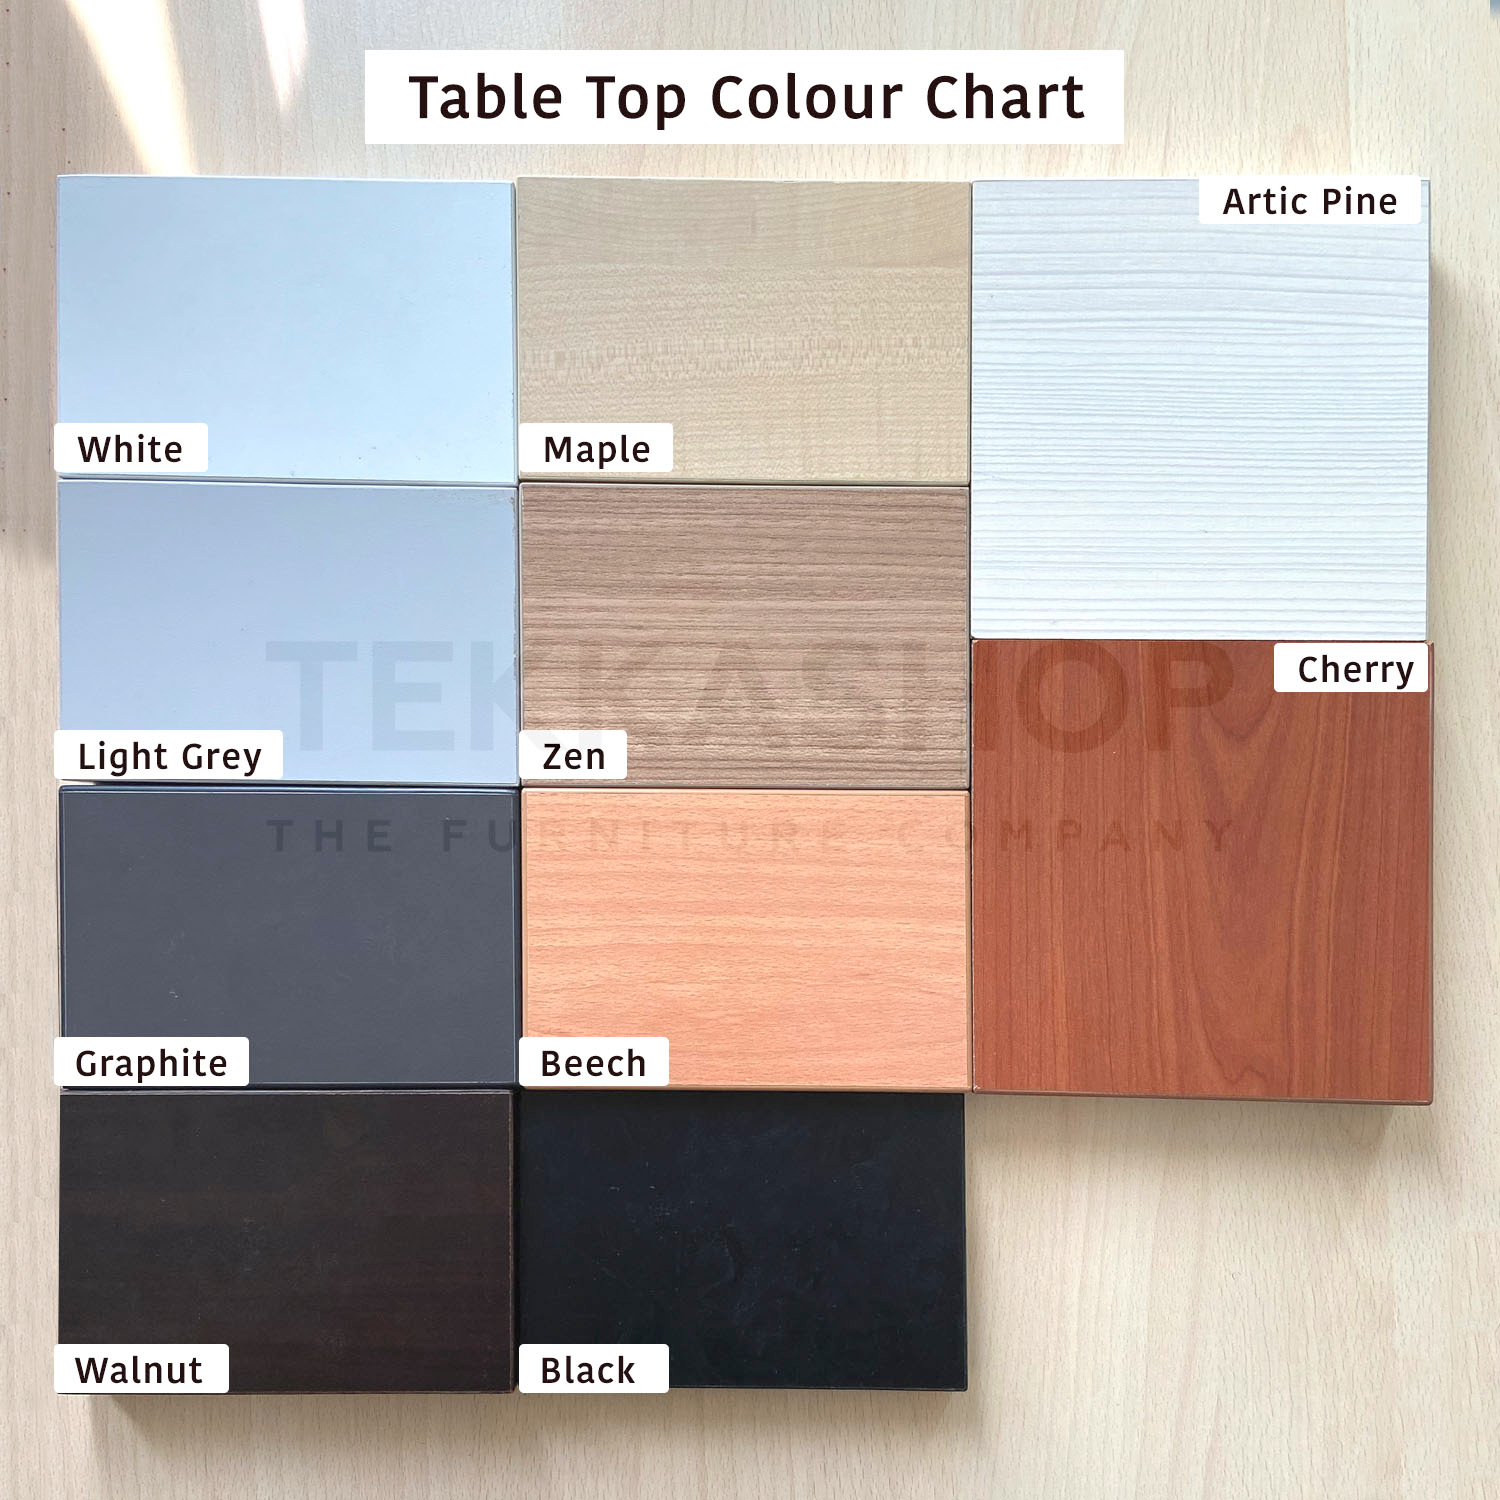 Table Top Colour Chart.jpg